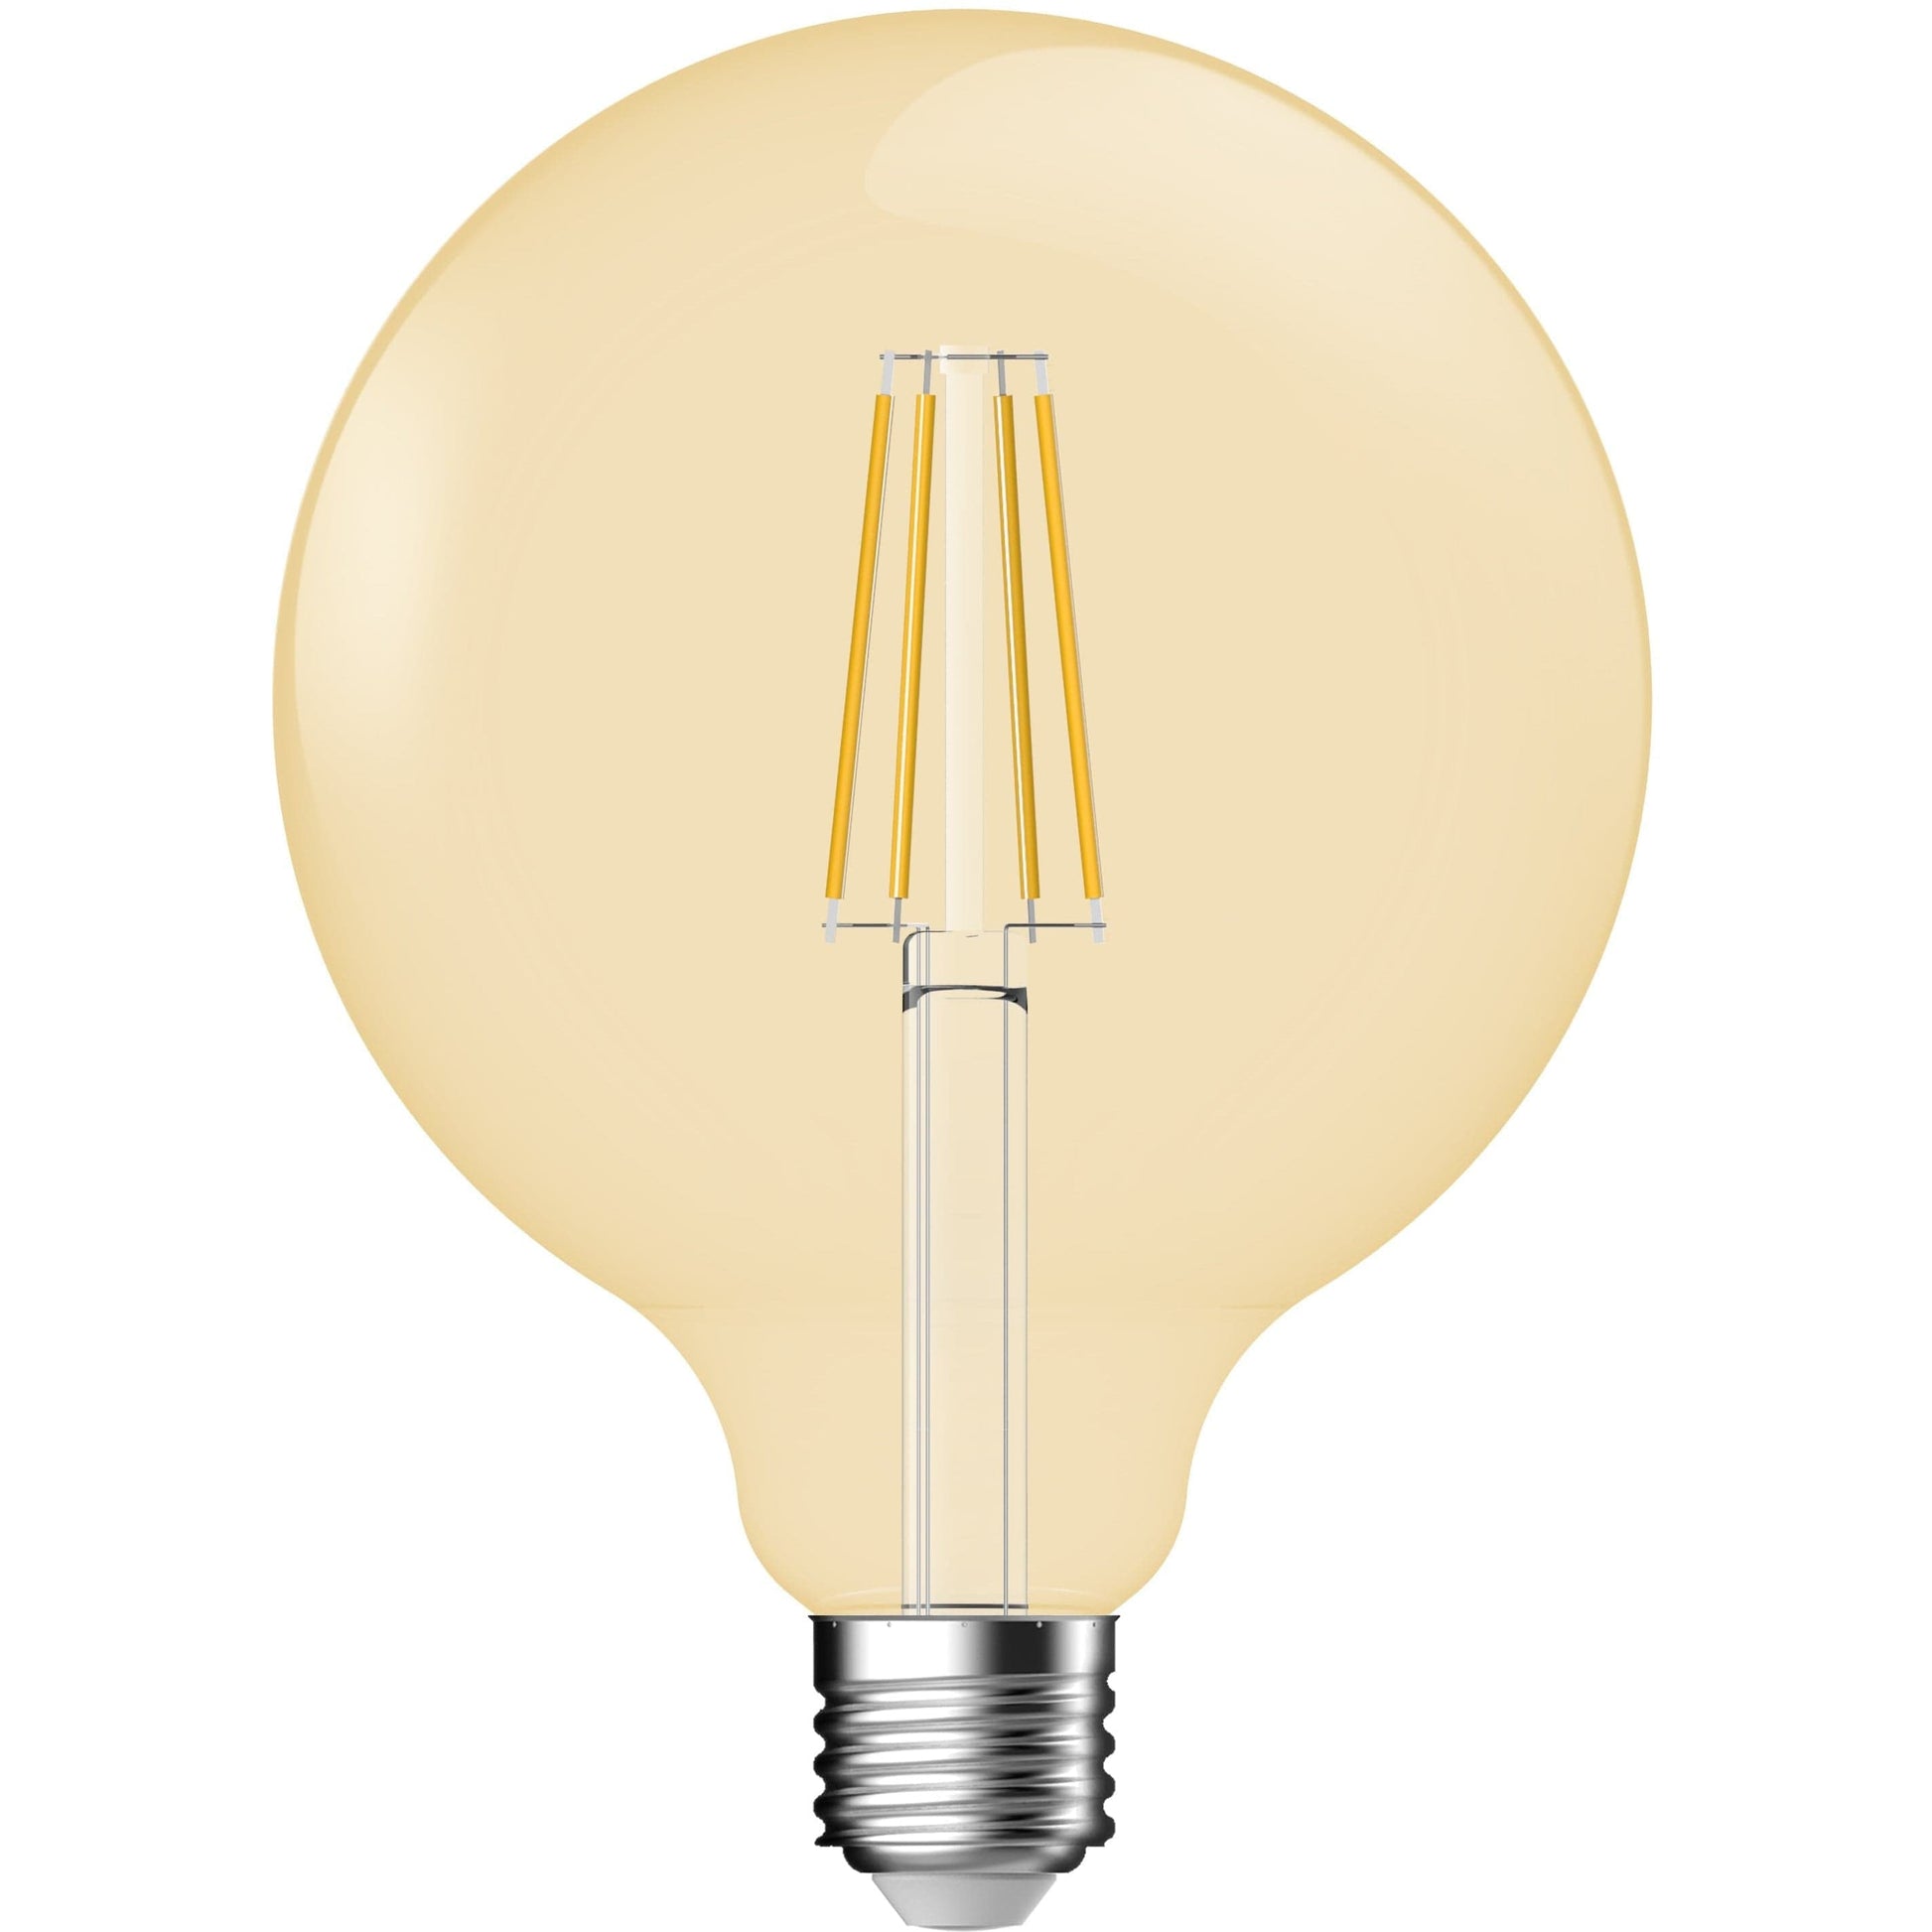 Heavenly Chandeliers Light Bulbs Decorative E27 Dimmable light bulb, warm golden glow